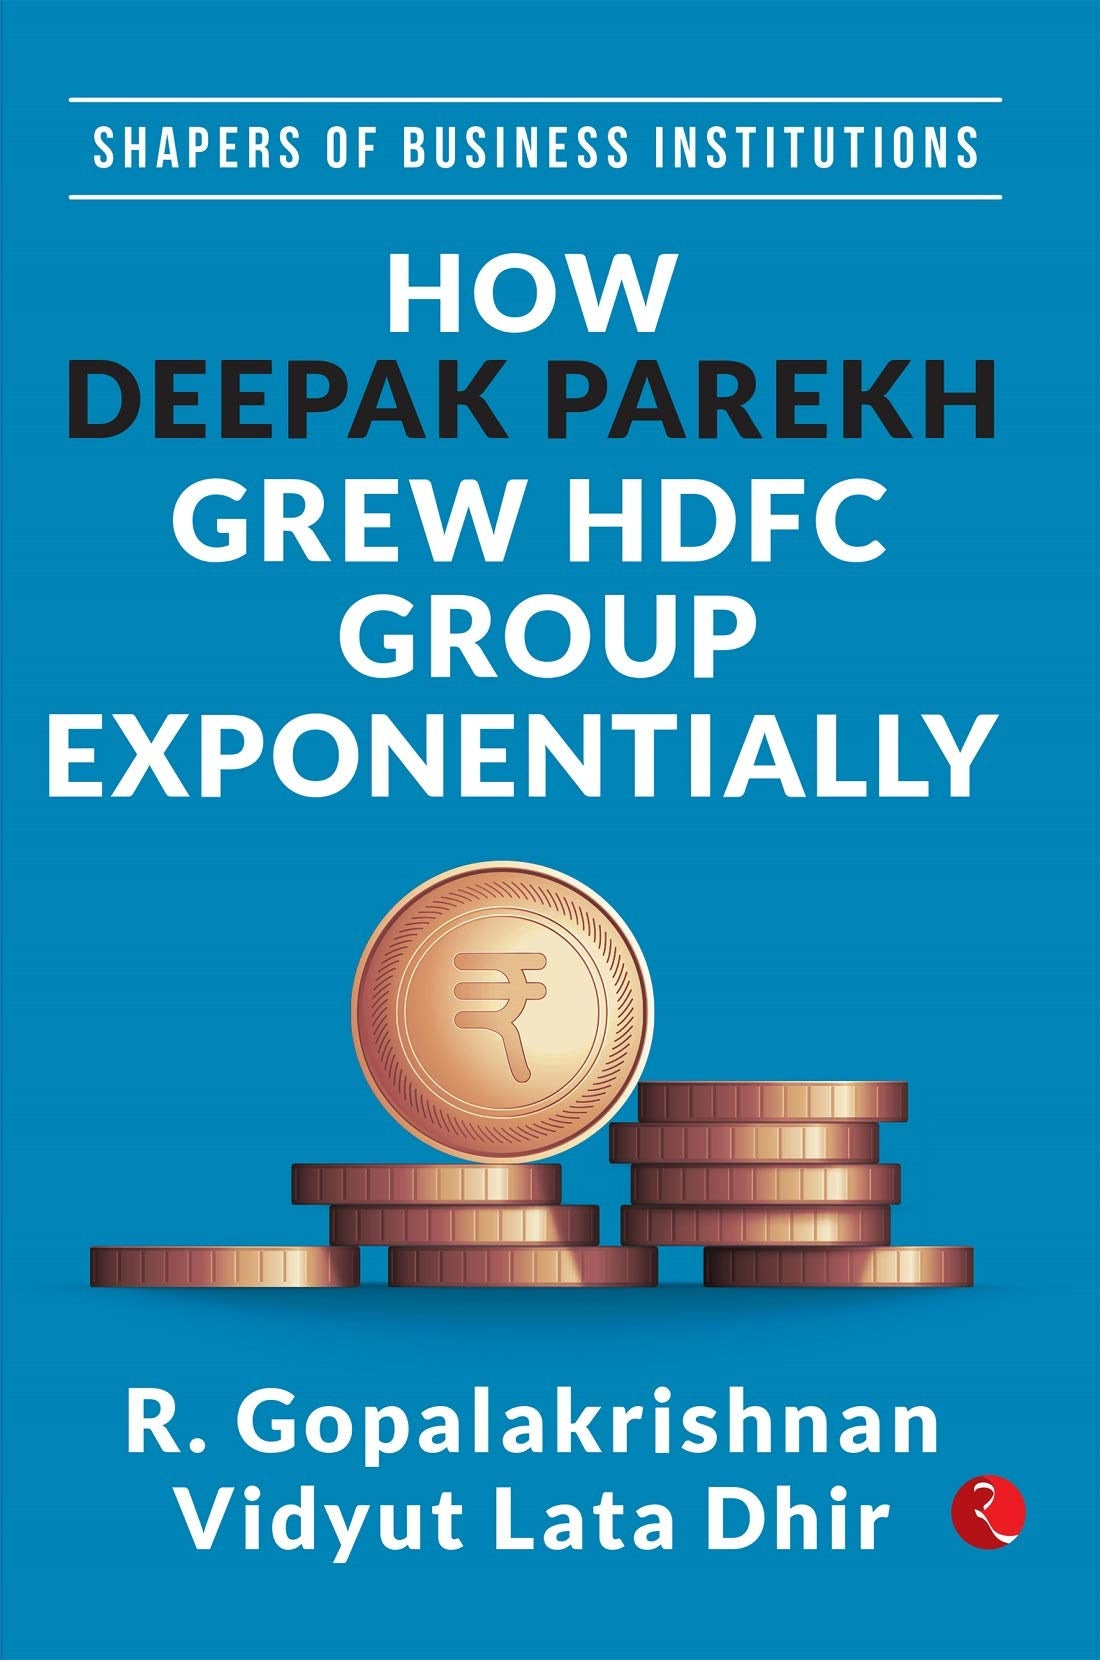 HOW DEEPAK PAREKH GREW HDFC GROUP EXPONENTIALLY